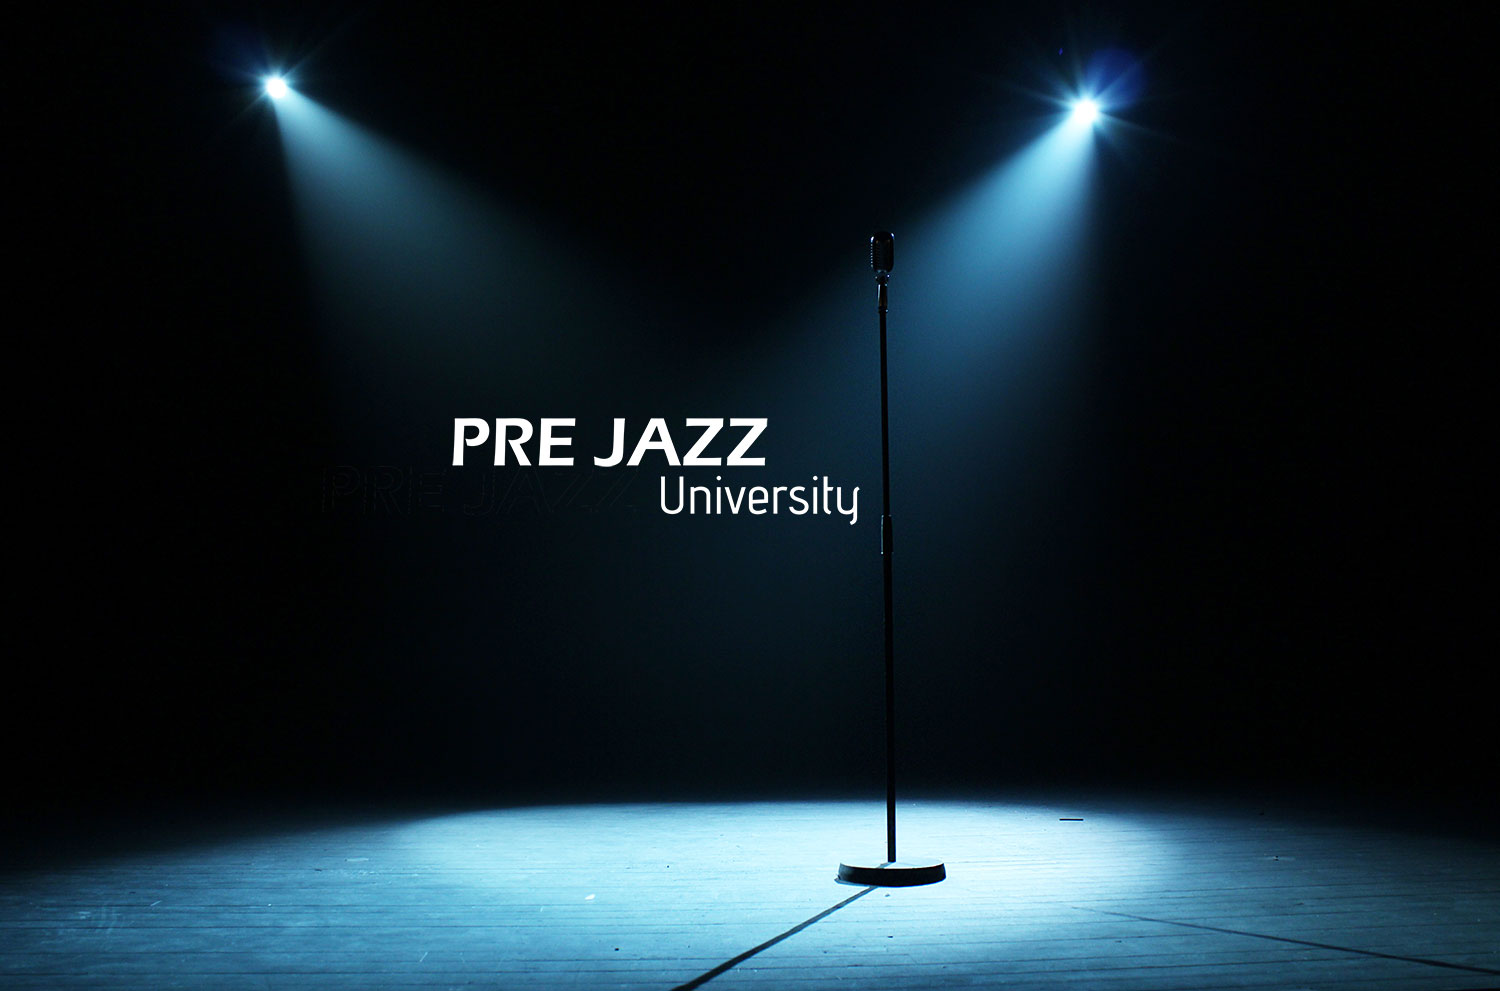 pre jazz university mezz breda